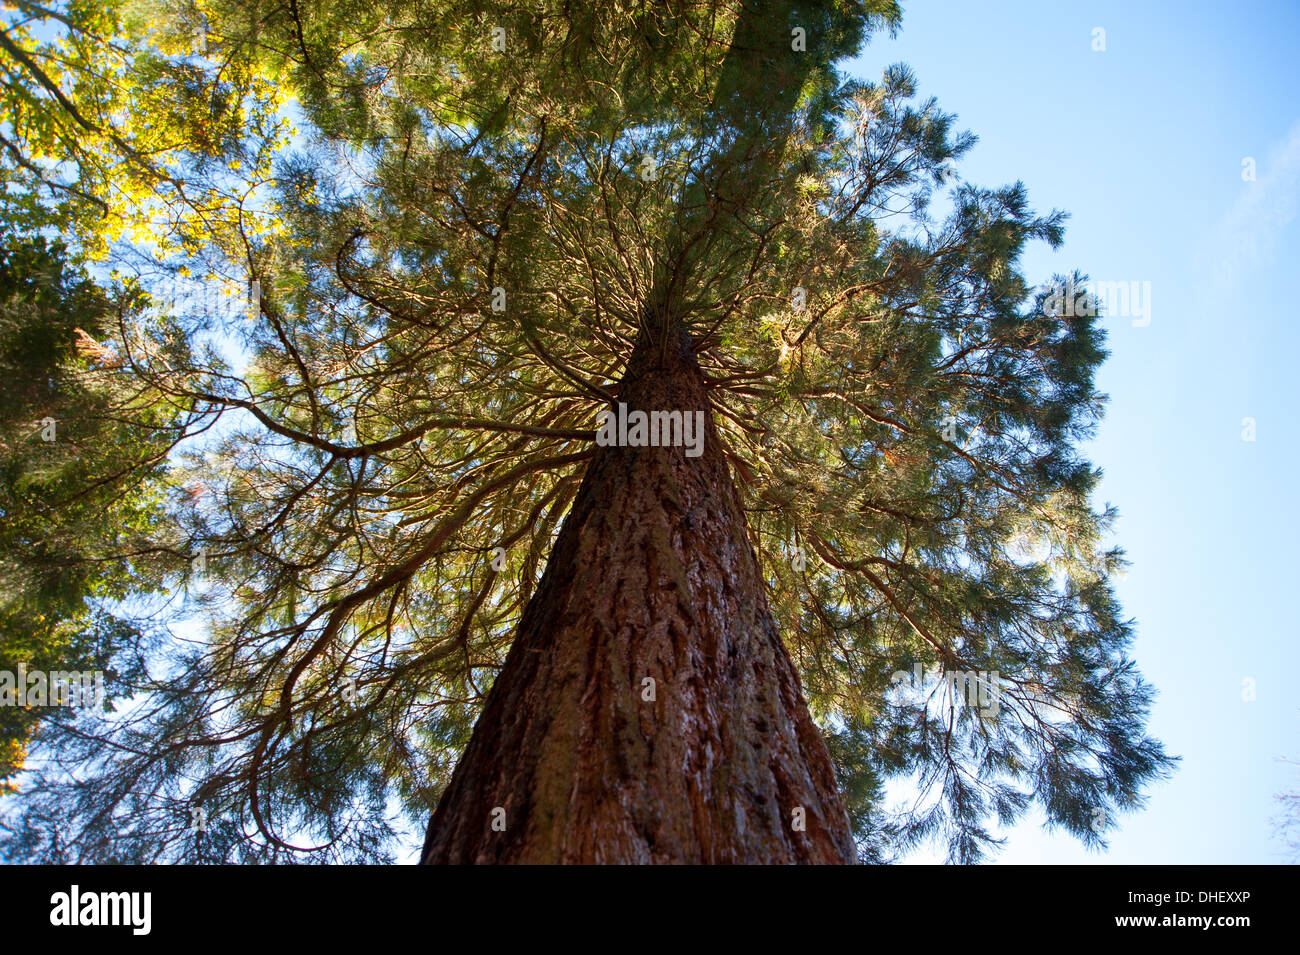 Media Photo Call - Wellingtonia Sierra Redwood Baumstamm aus Kalifornien USA Sequoiadendron gigateum bei Wakehurst UK Stockfoto